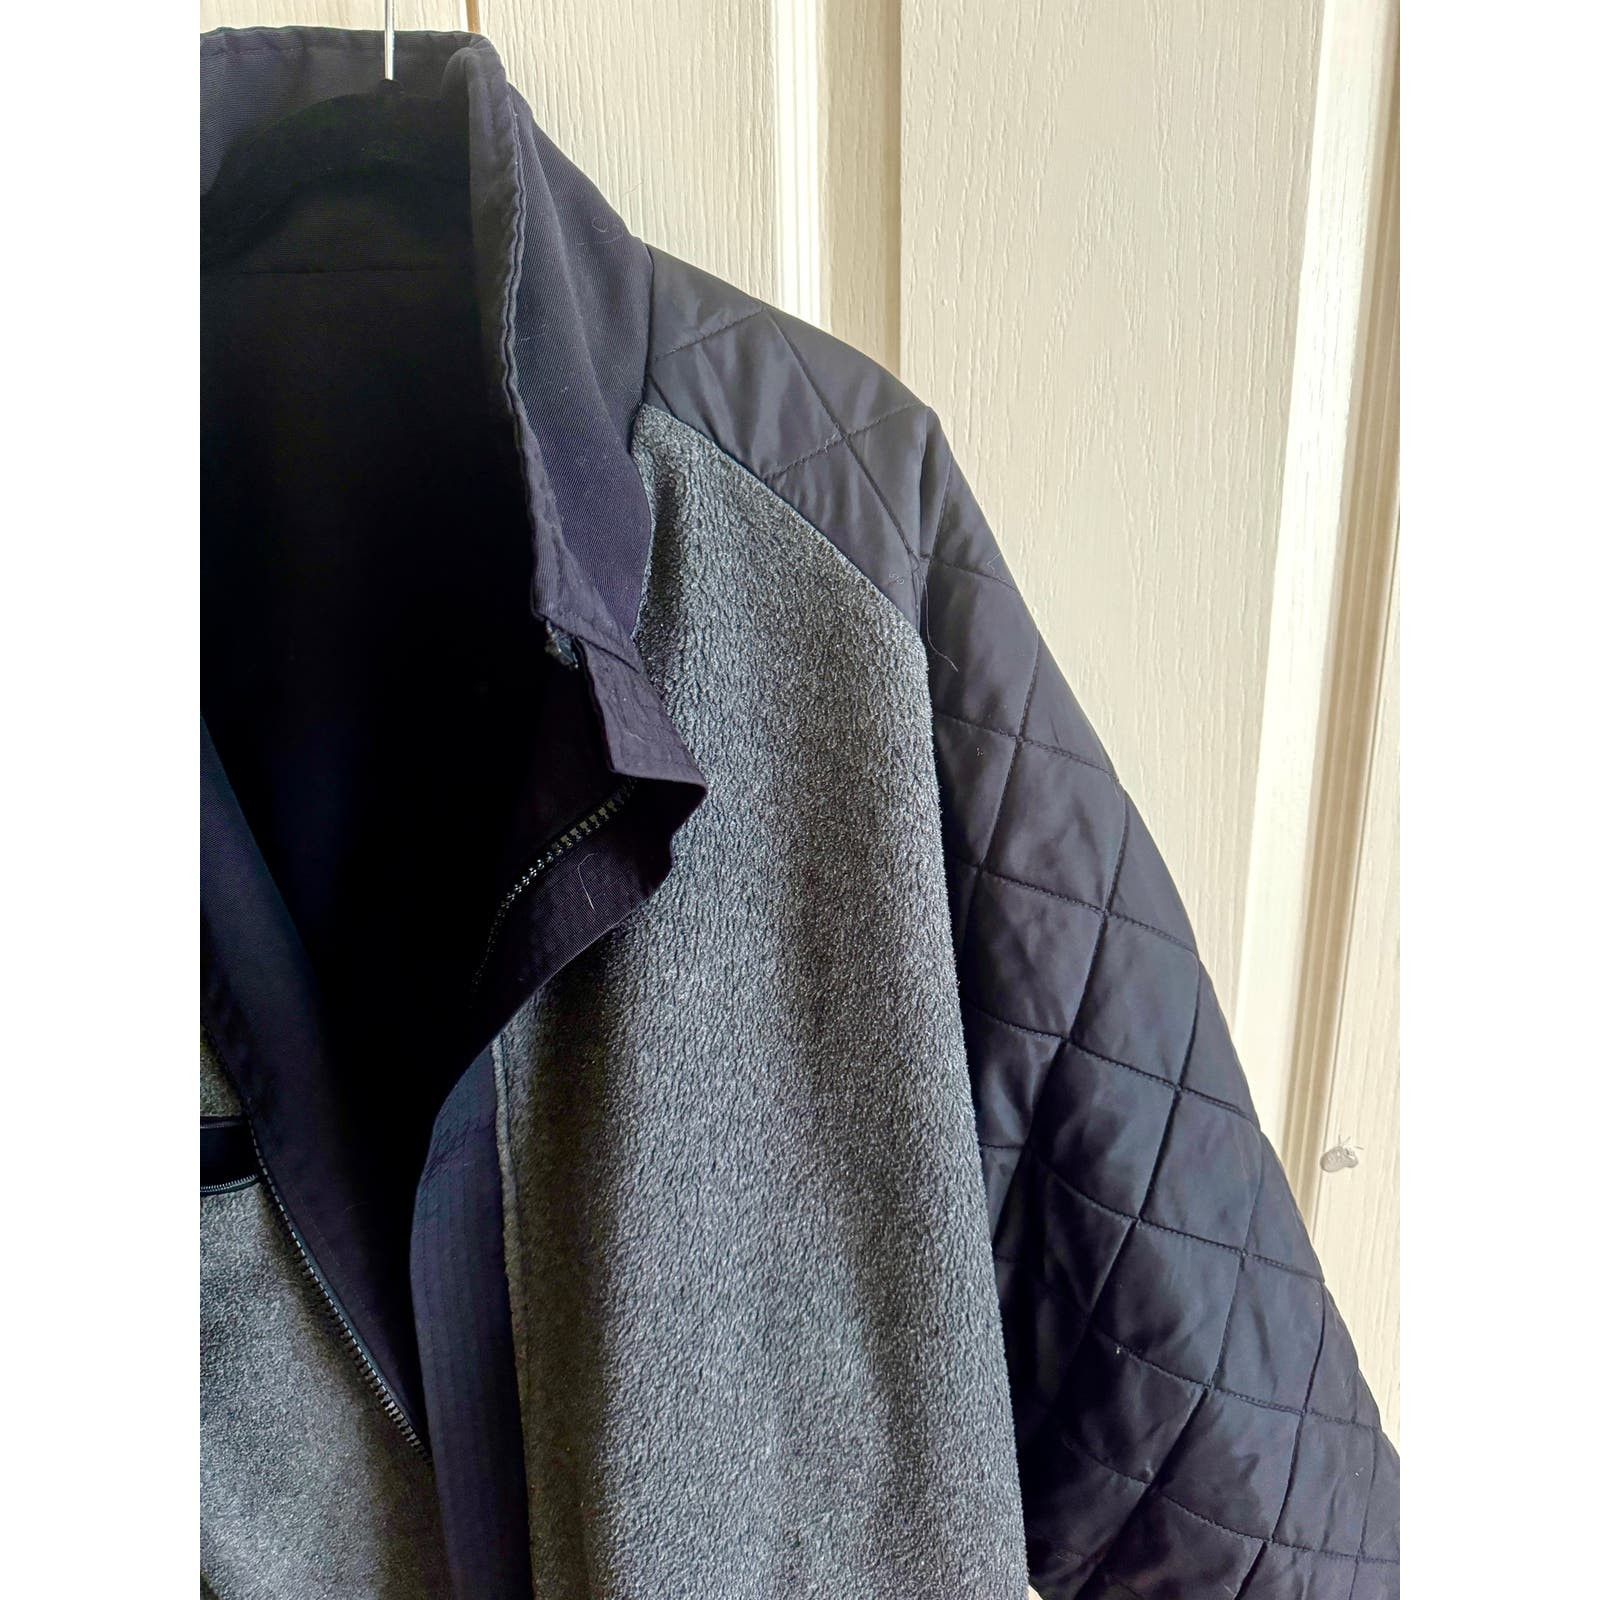 Carhartt Vintage Carhartt Workshield Jacket Fleece Lined Black J72 Size US XL / EU 56 / 4 - 12 Preview